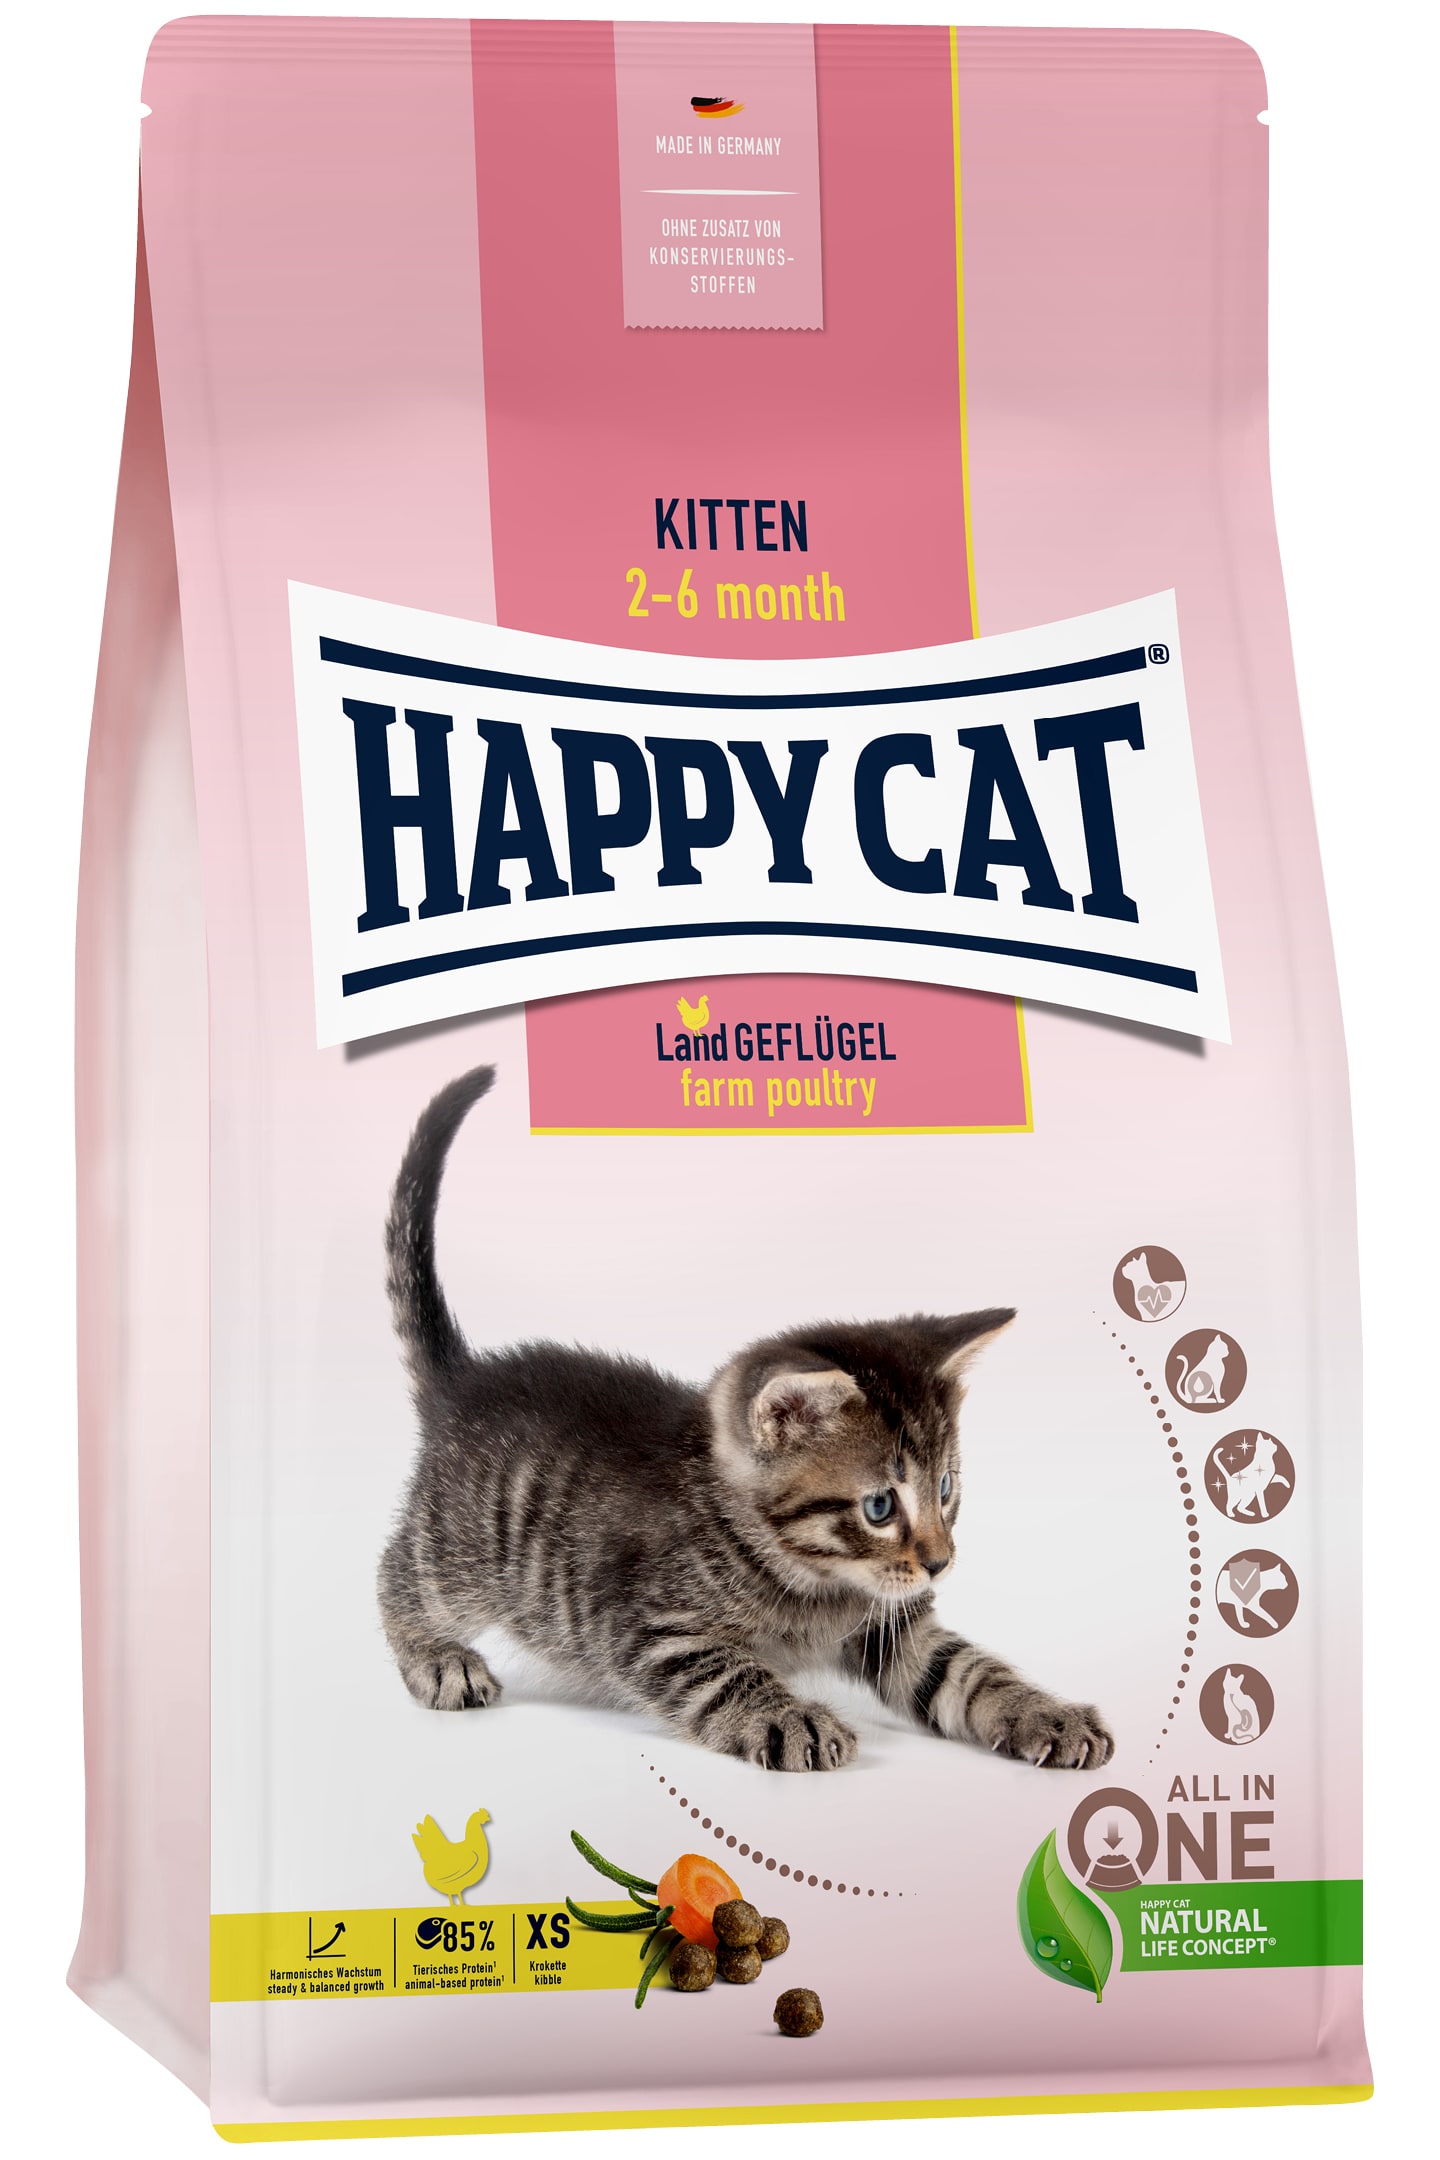 Happy Cat Supreme Young Kitten LandGeflügel